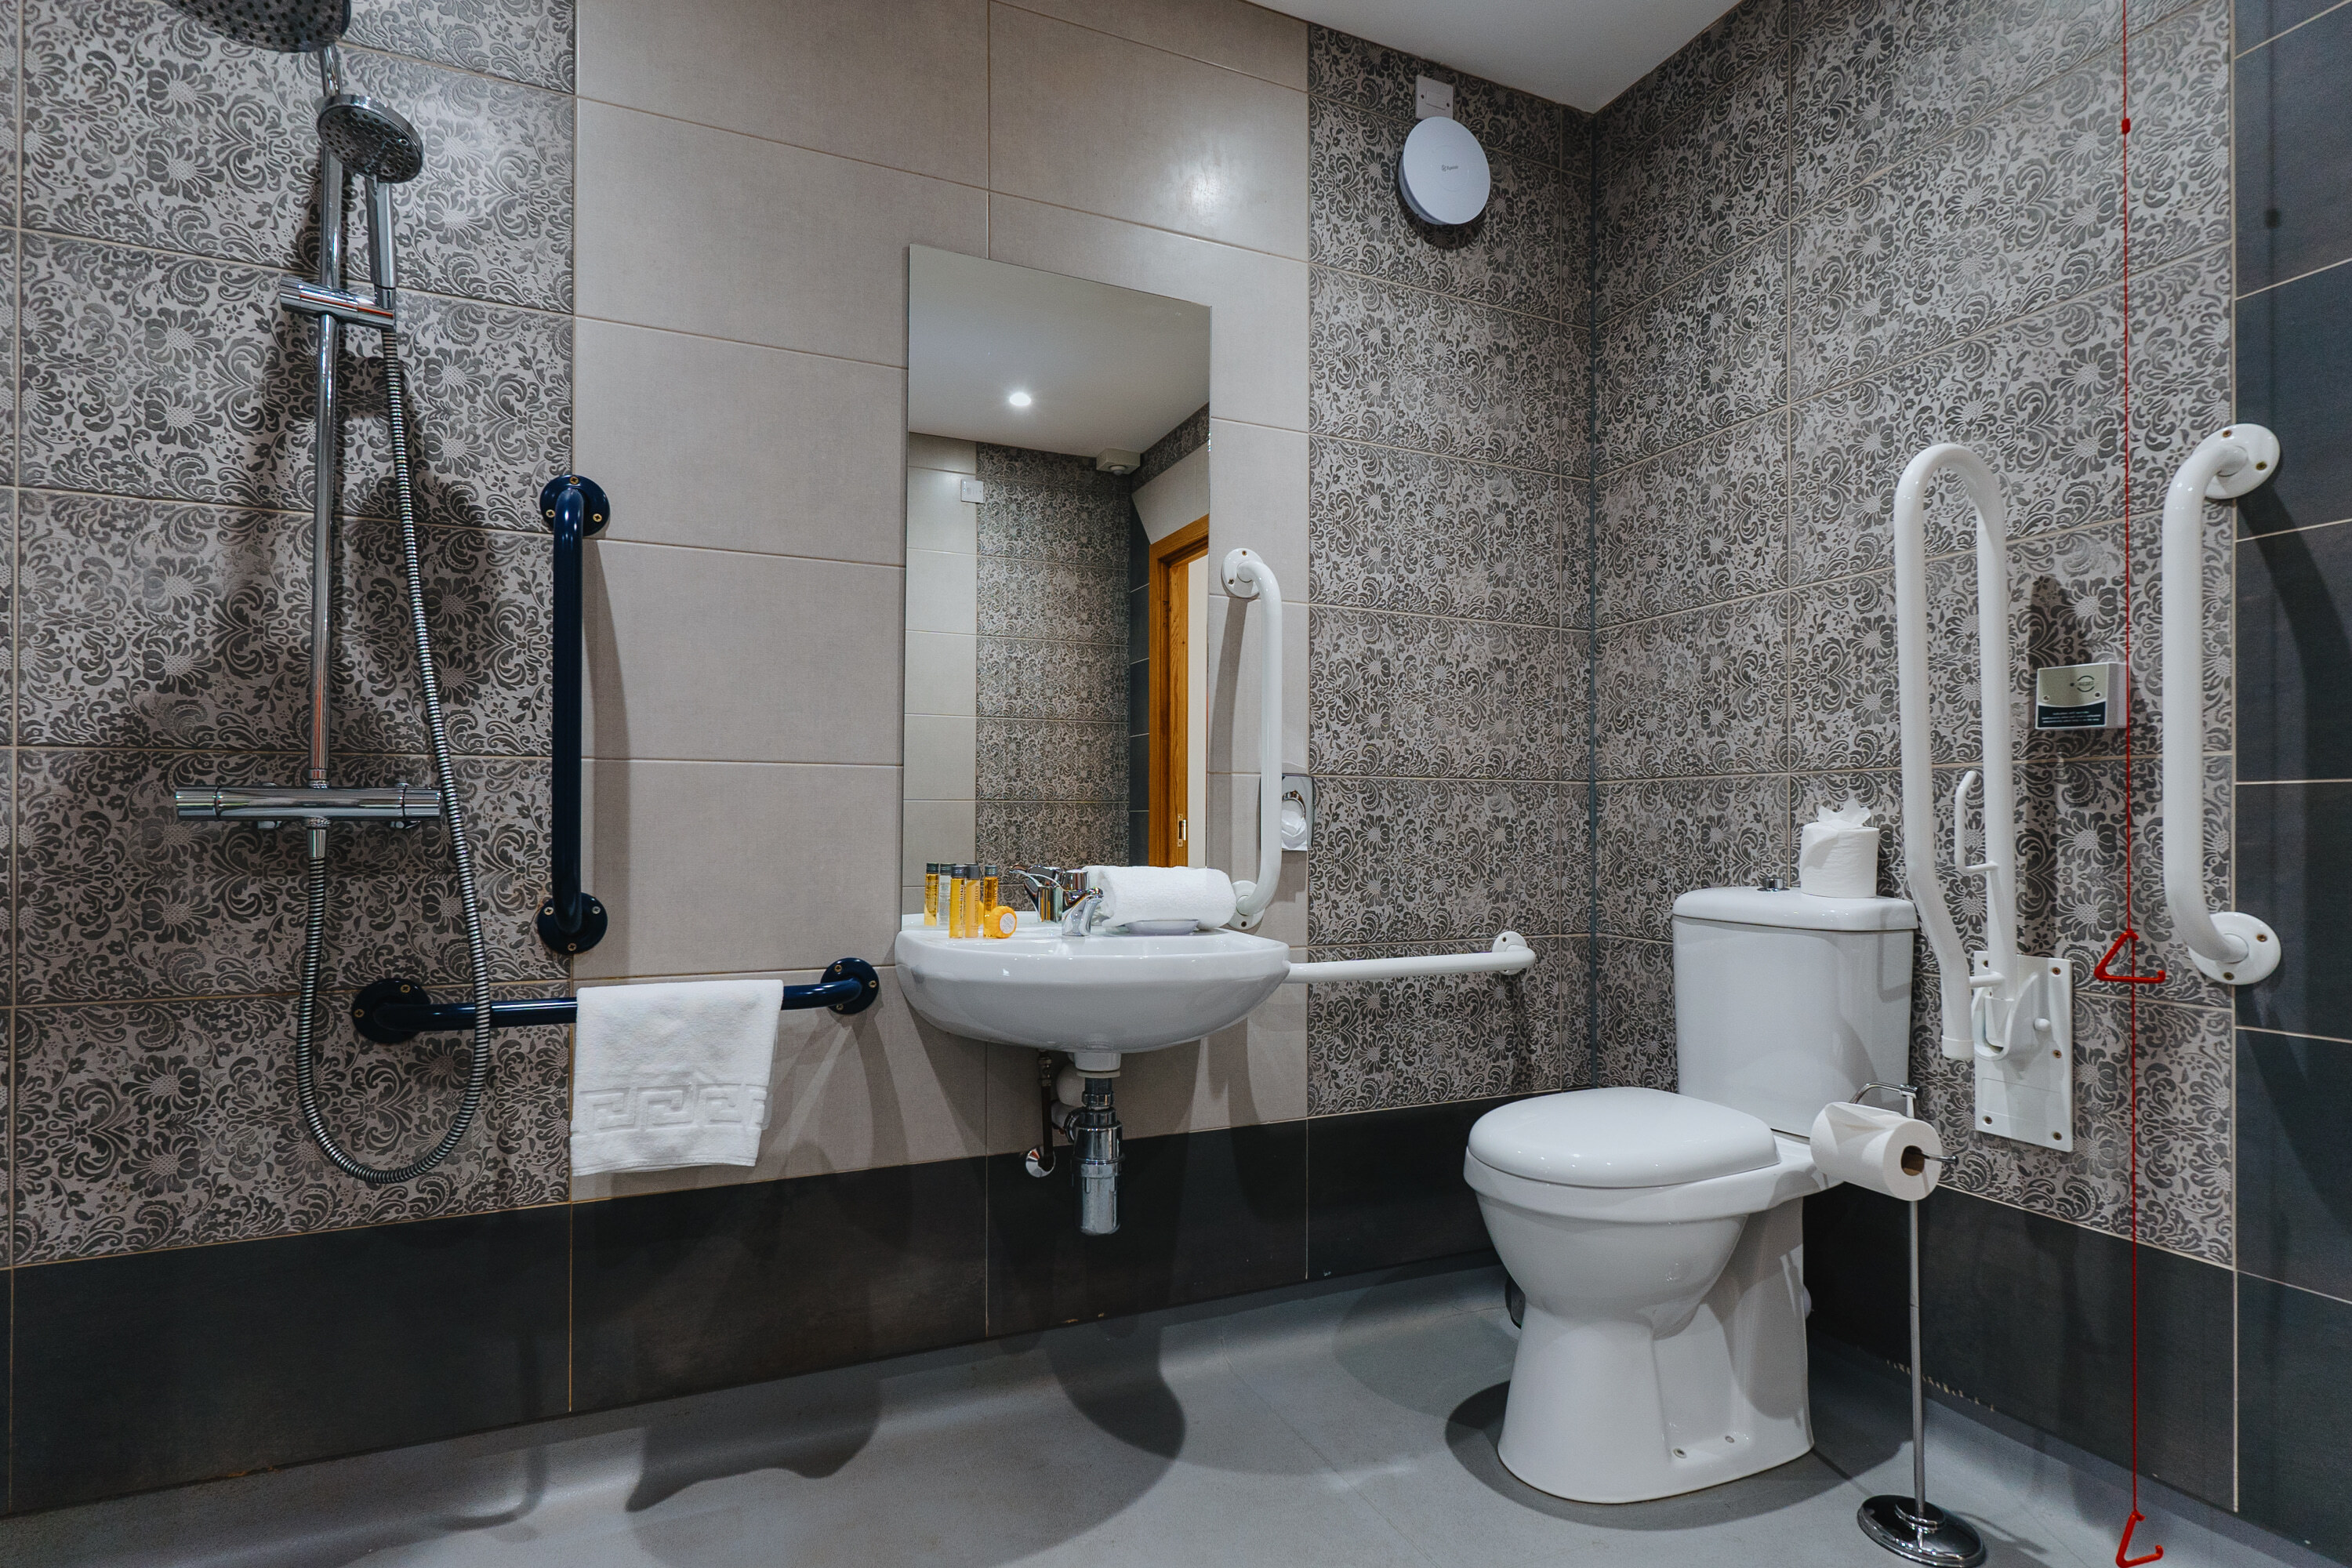 Lanelay Hall Hotel & Spa Accessible Bathroom